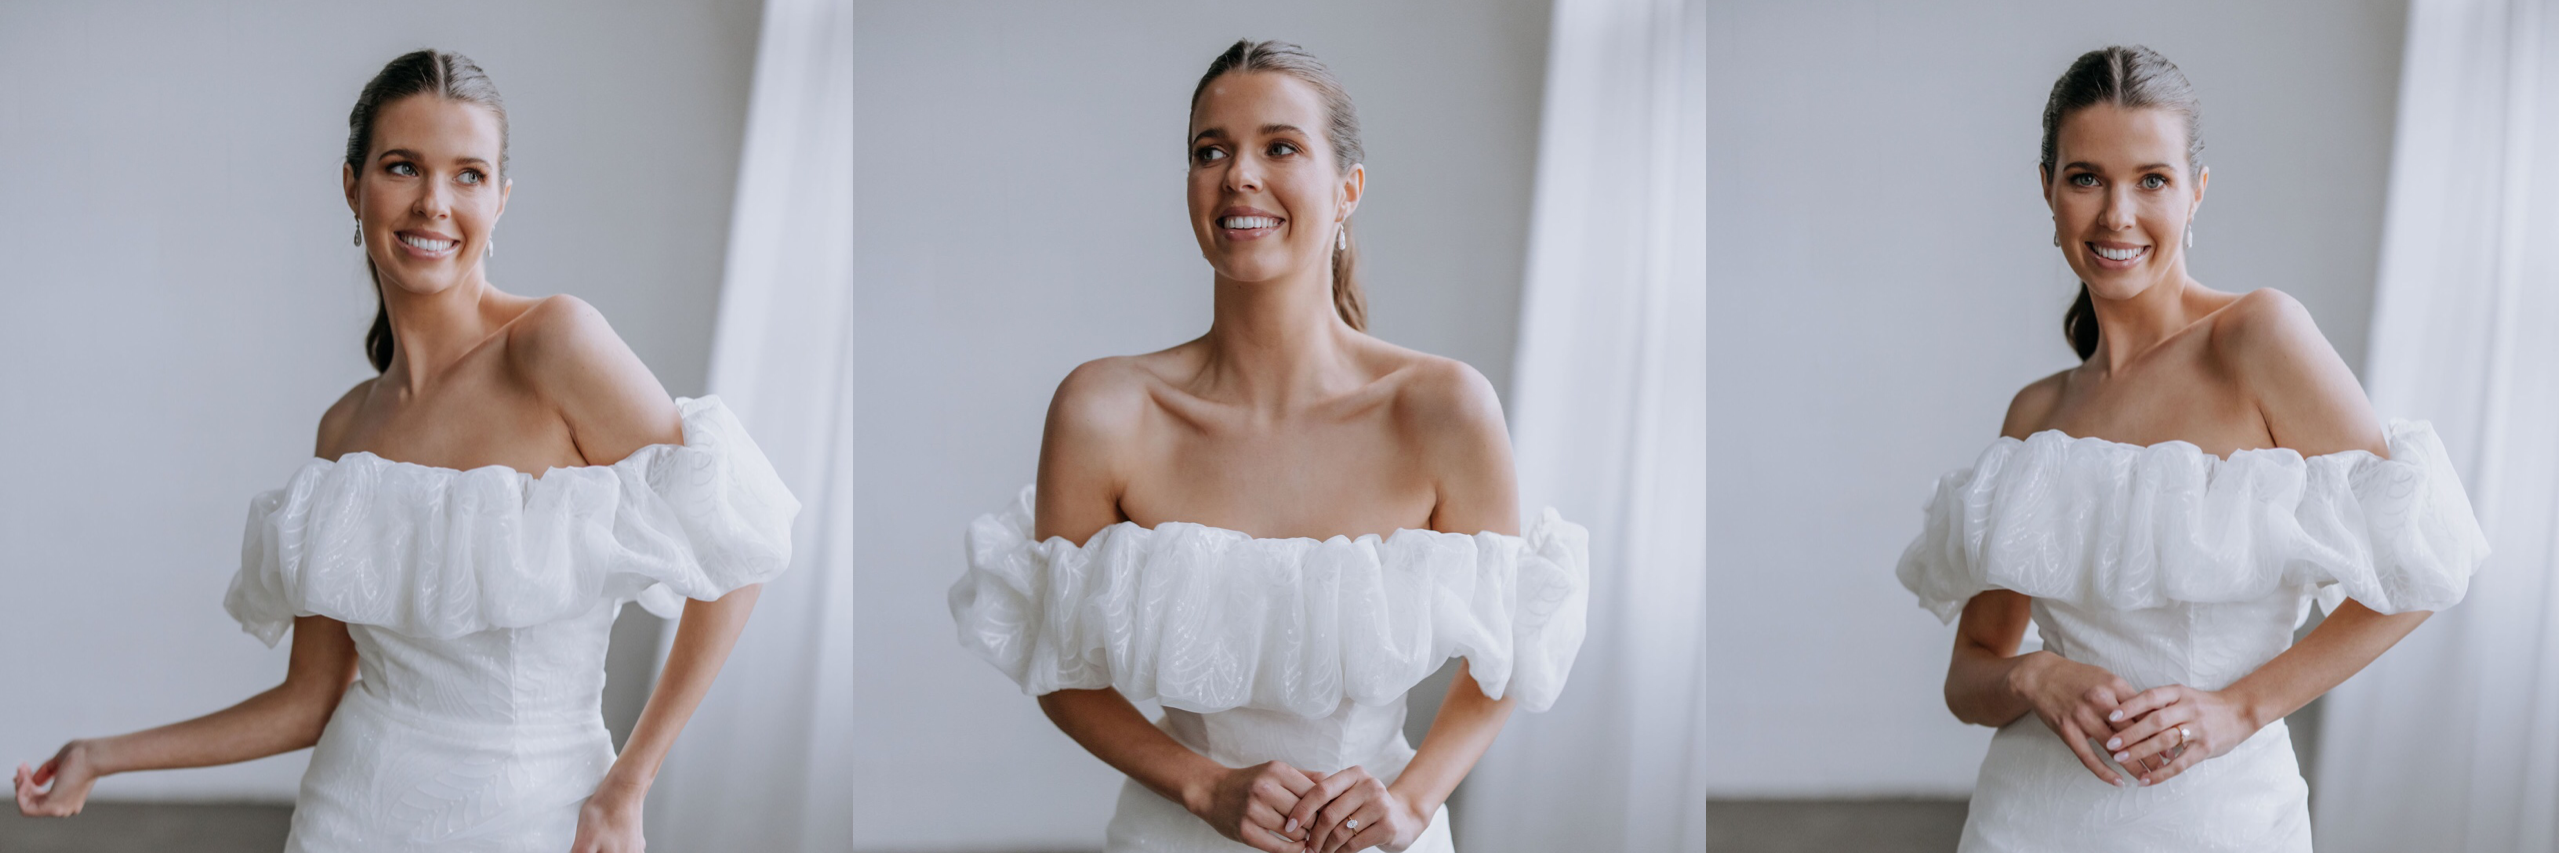 wedding dresses australia online